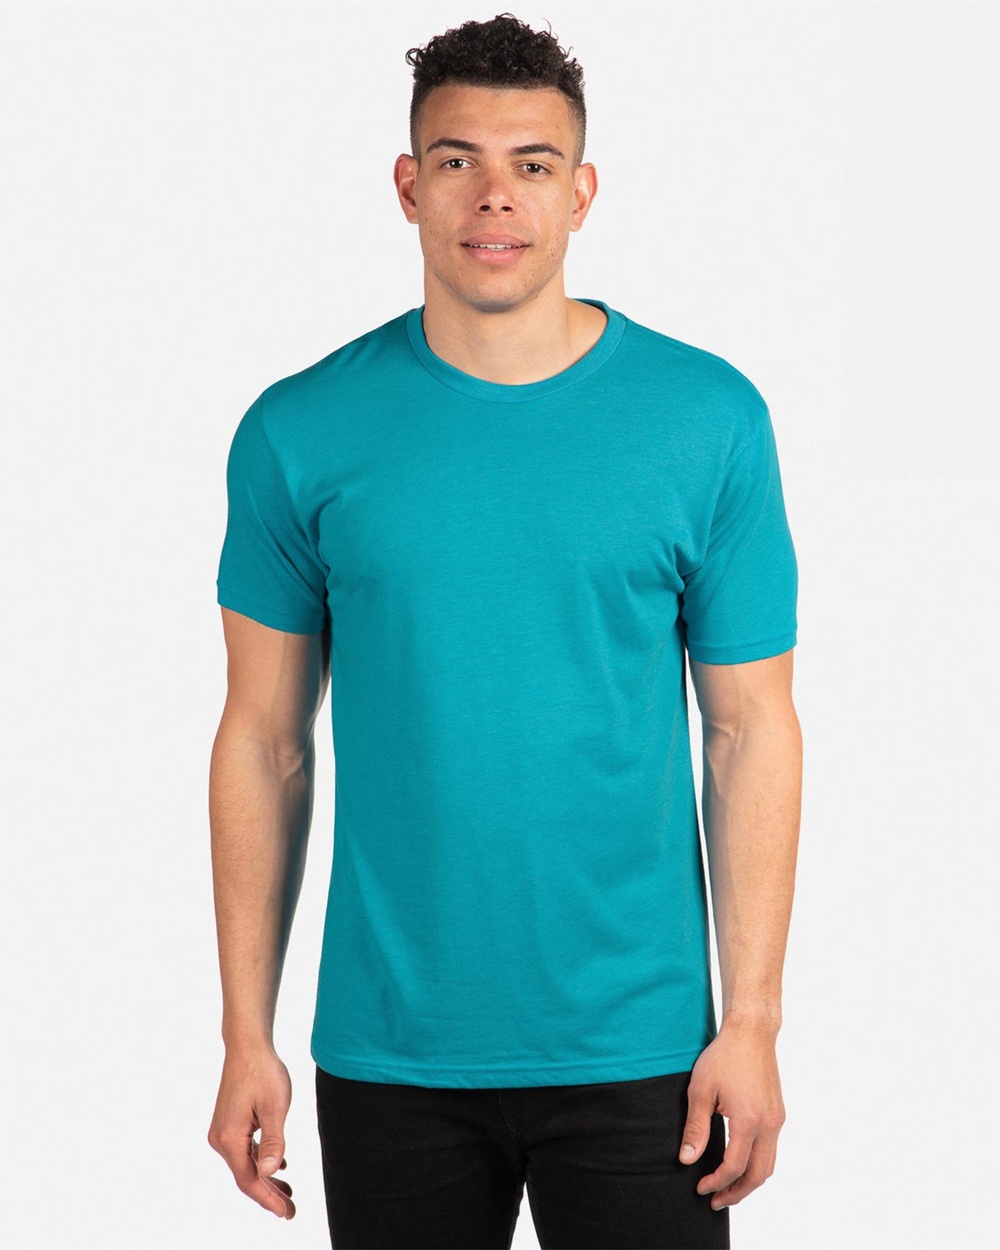 Next Level 6010 Unisex Triblend T-Shirt